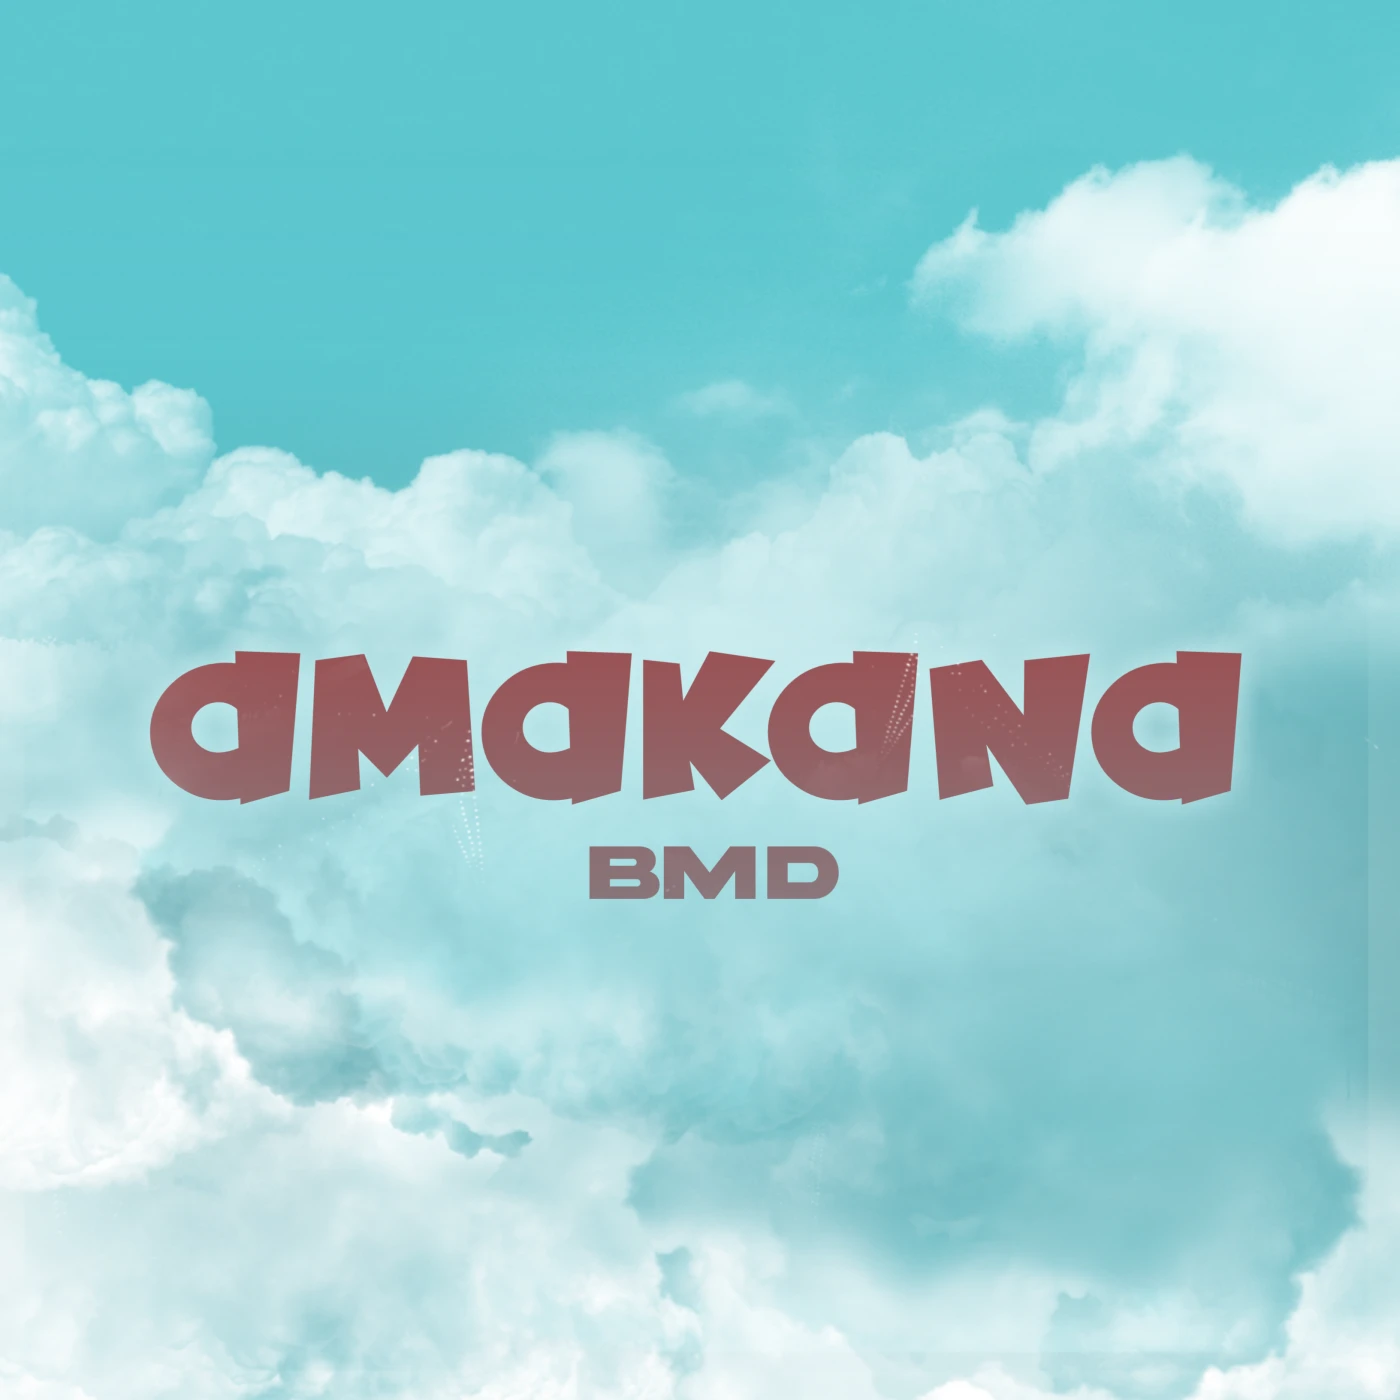 bmd-amakana-bmd - mp3 download